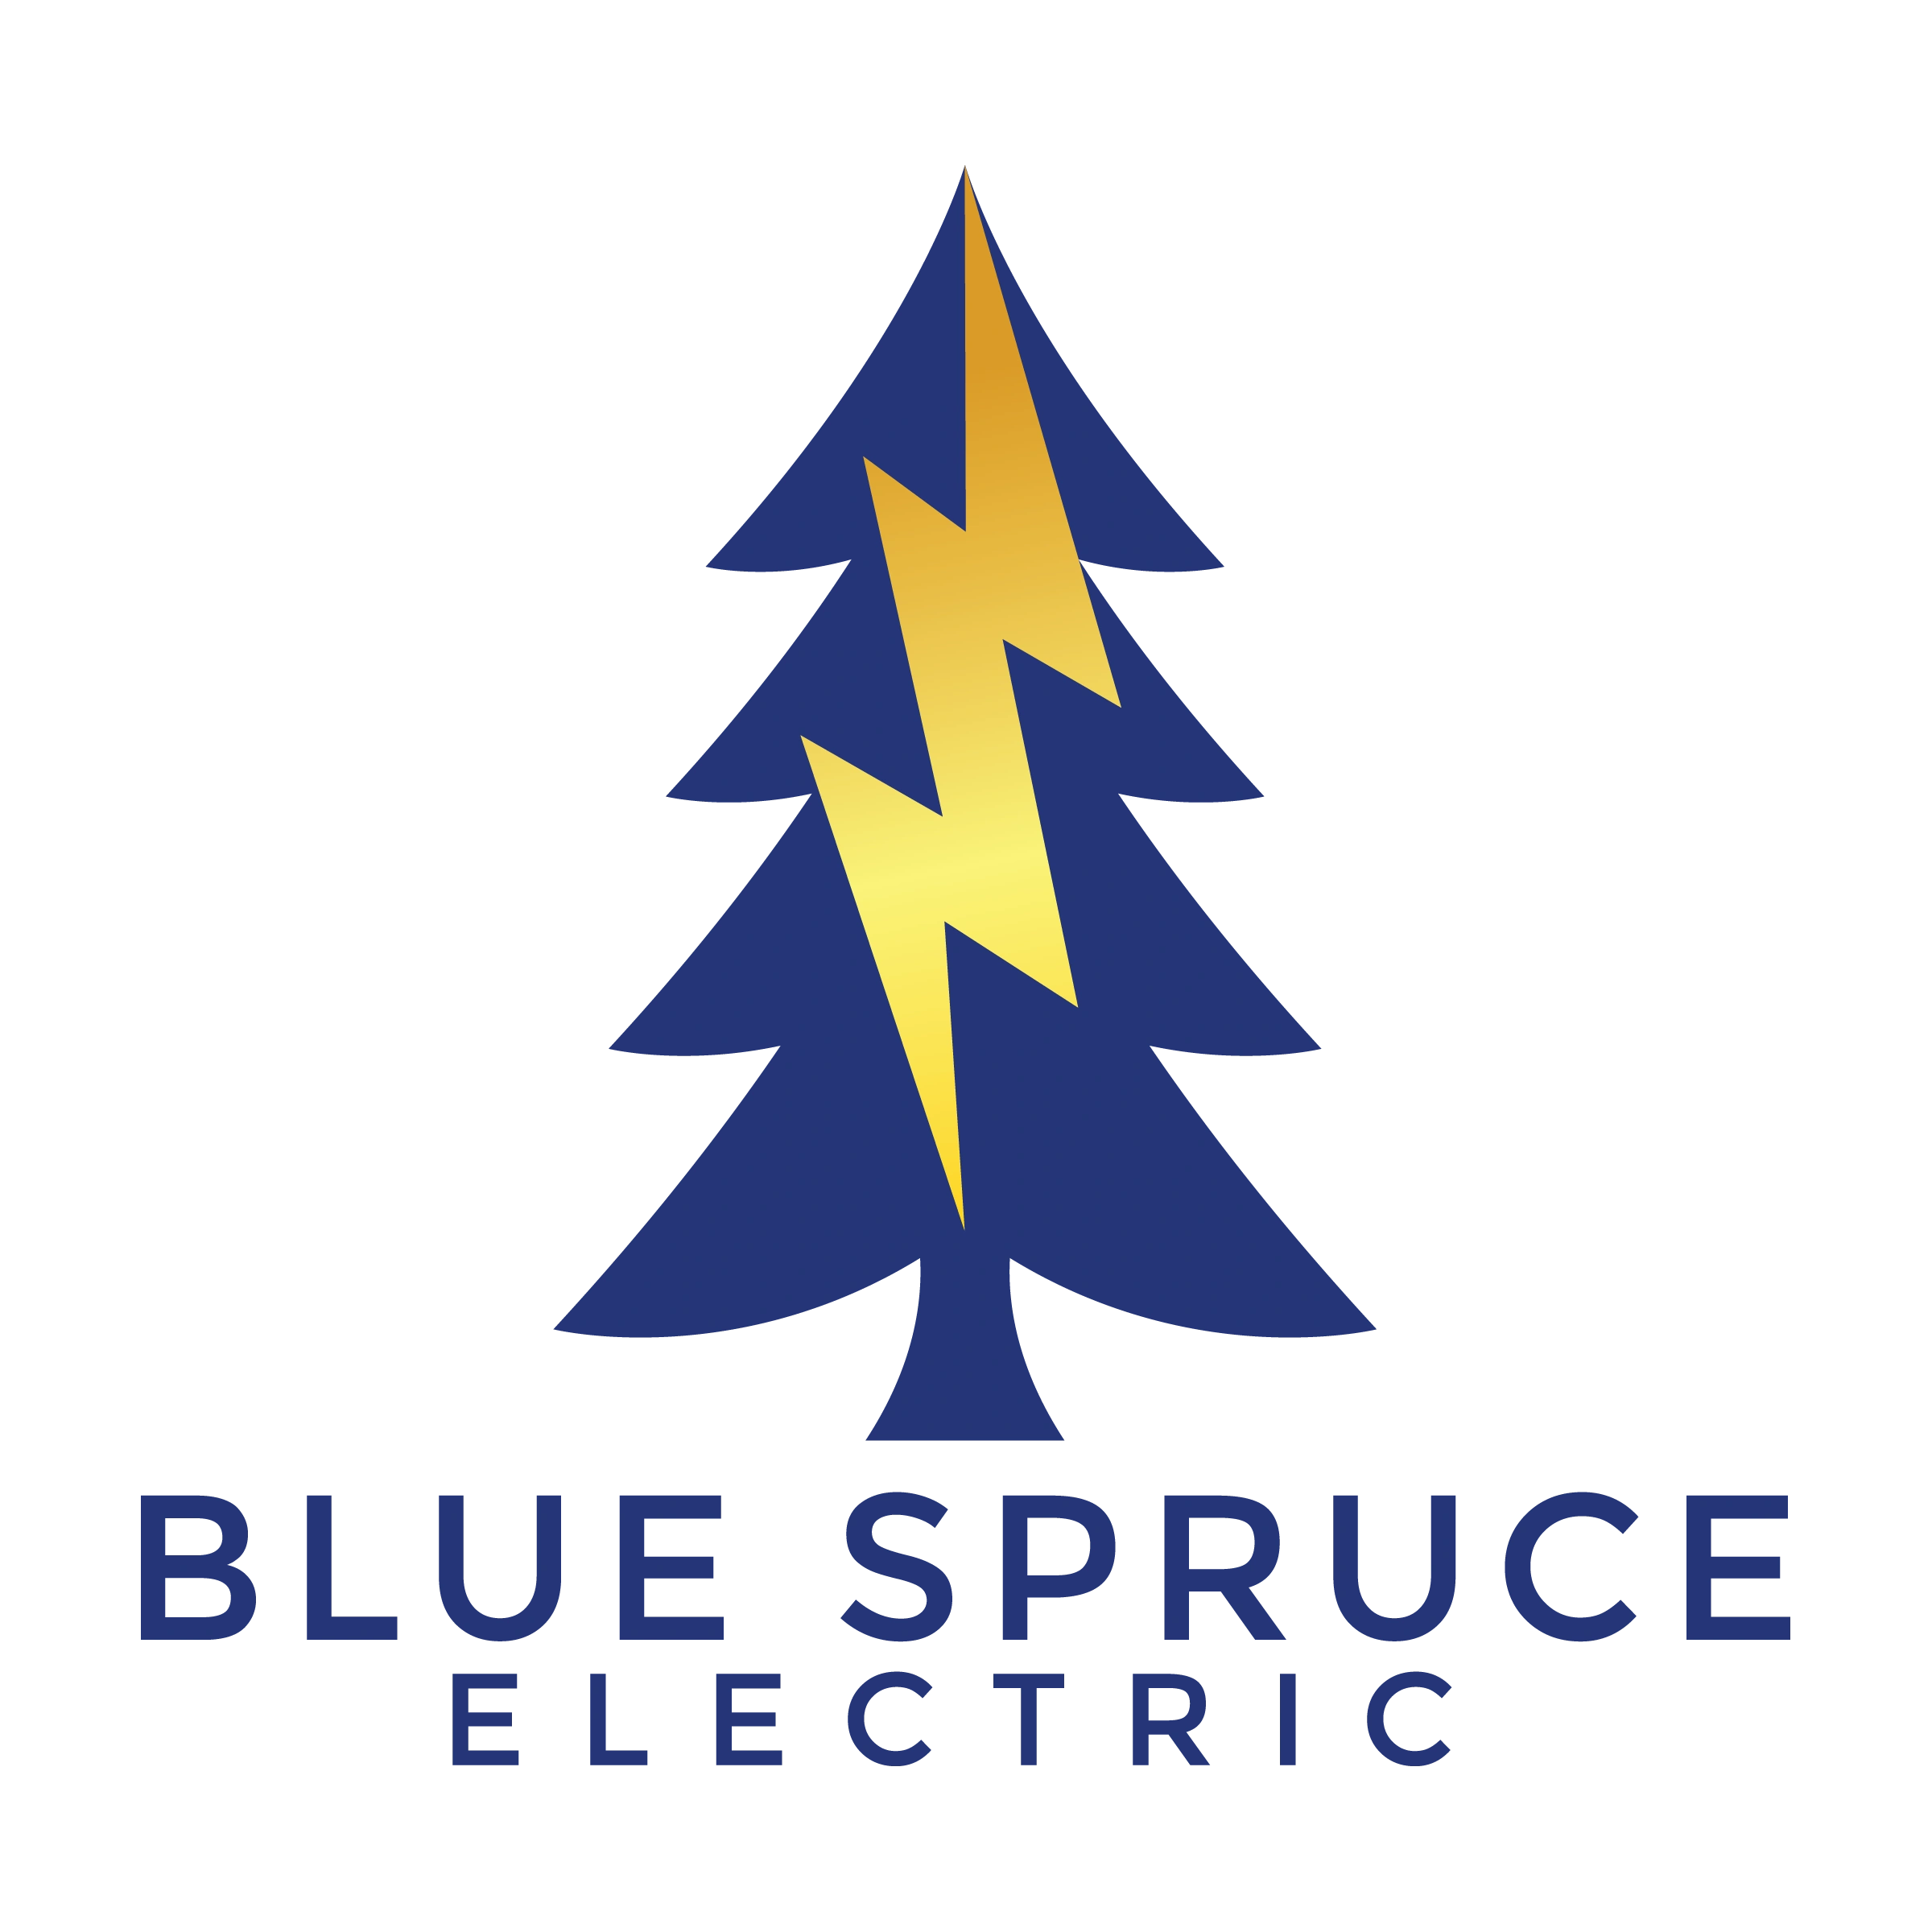 Blue Spruce Electric